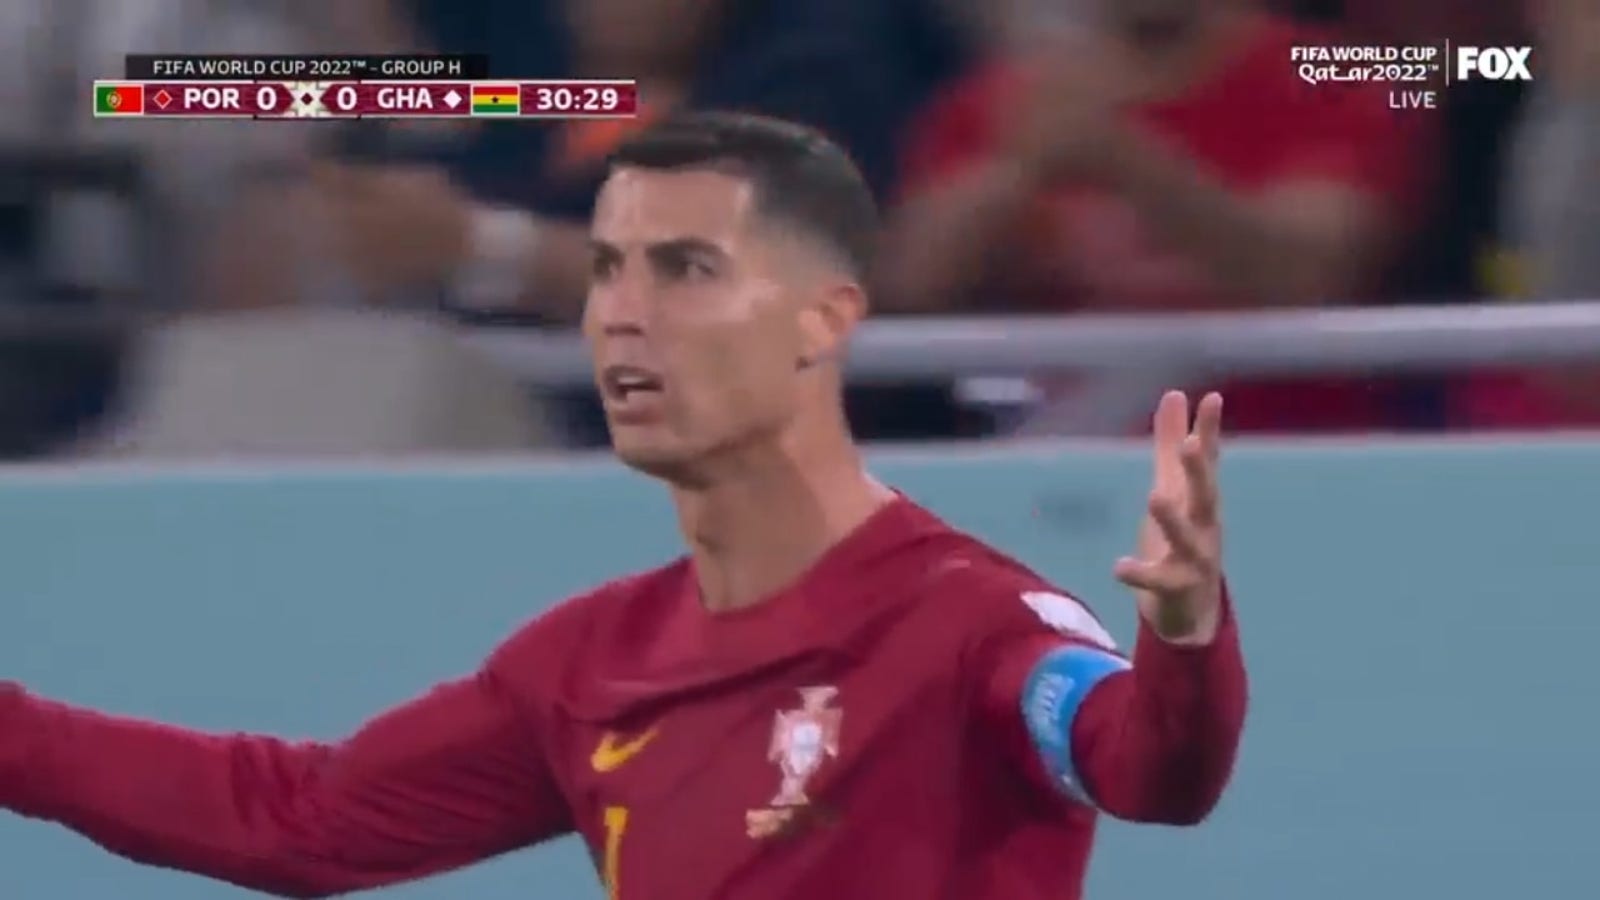 Cristiano Ronaldo's goal vs Ghana overturned by wrong call